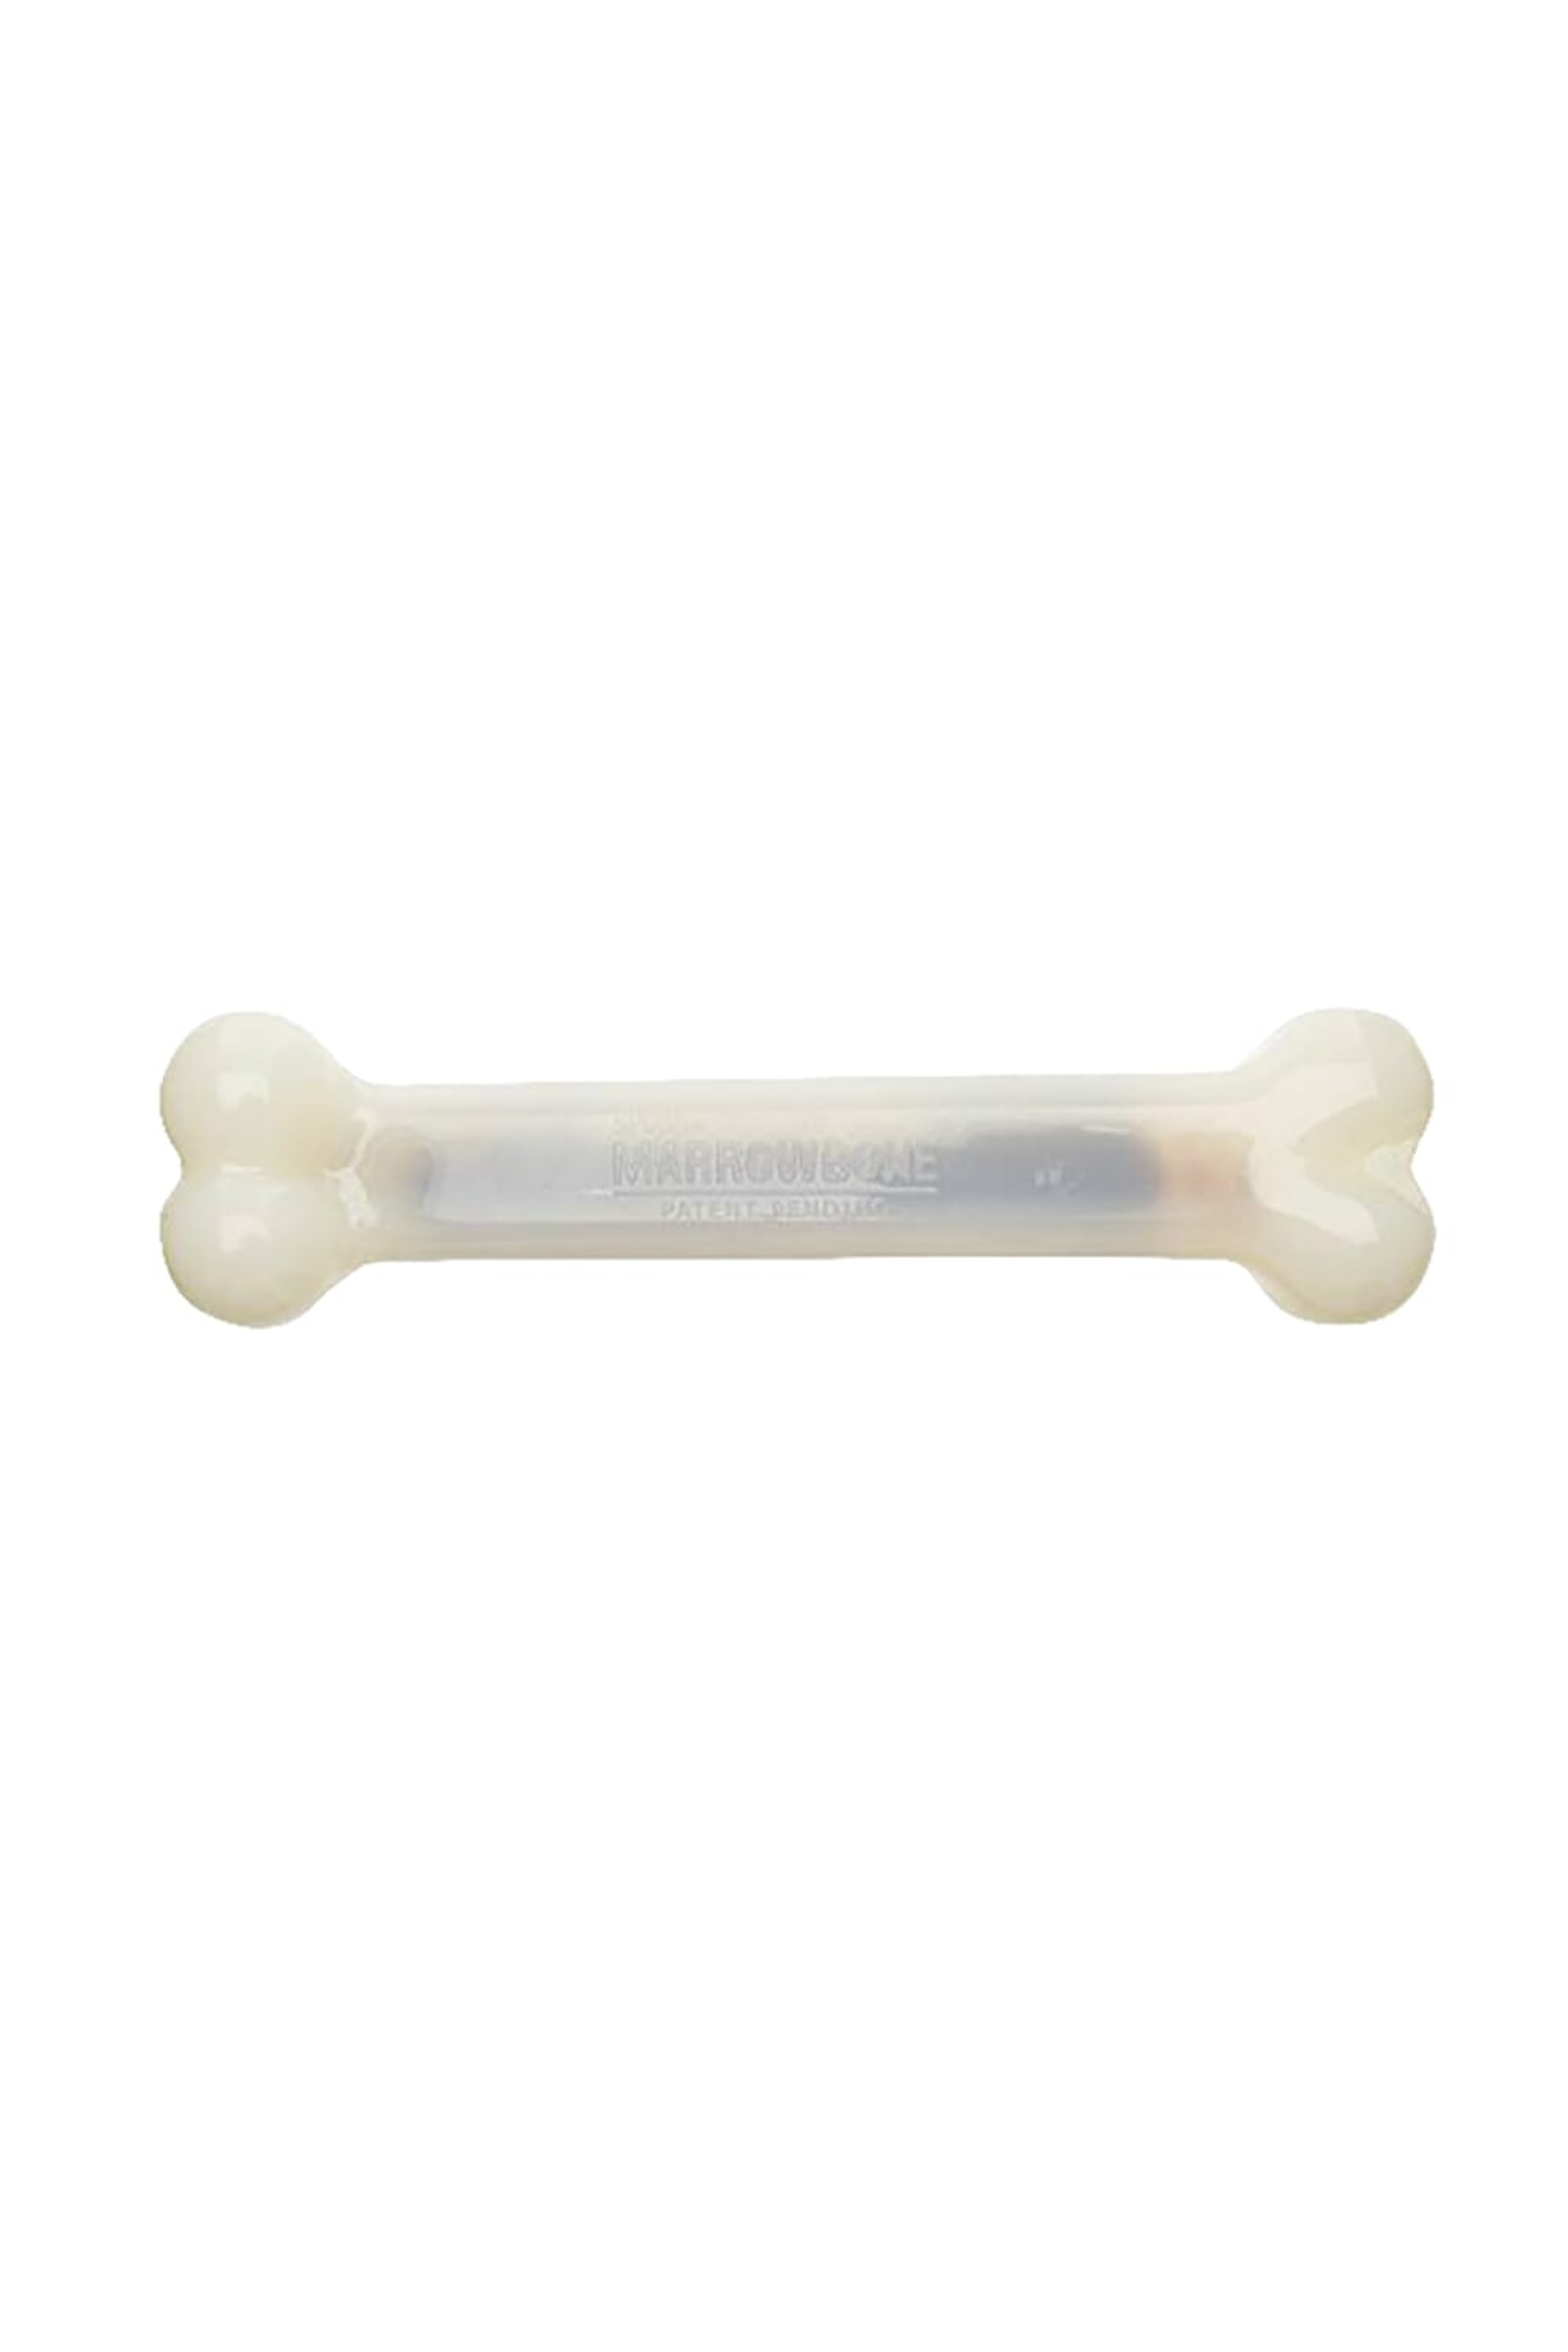 Unbranded Marrow Bone Dog Toy (may Vary) (large)